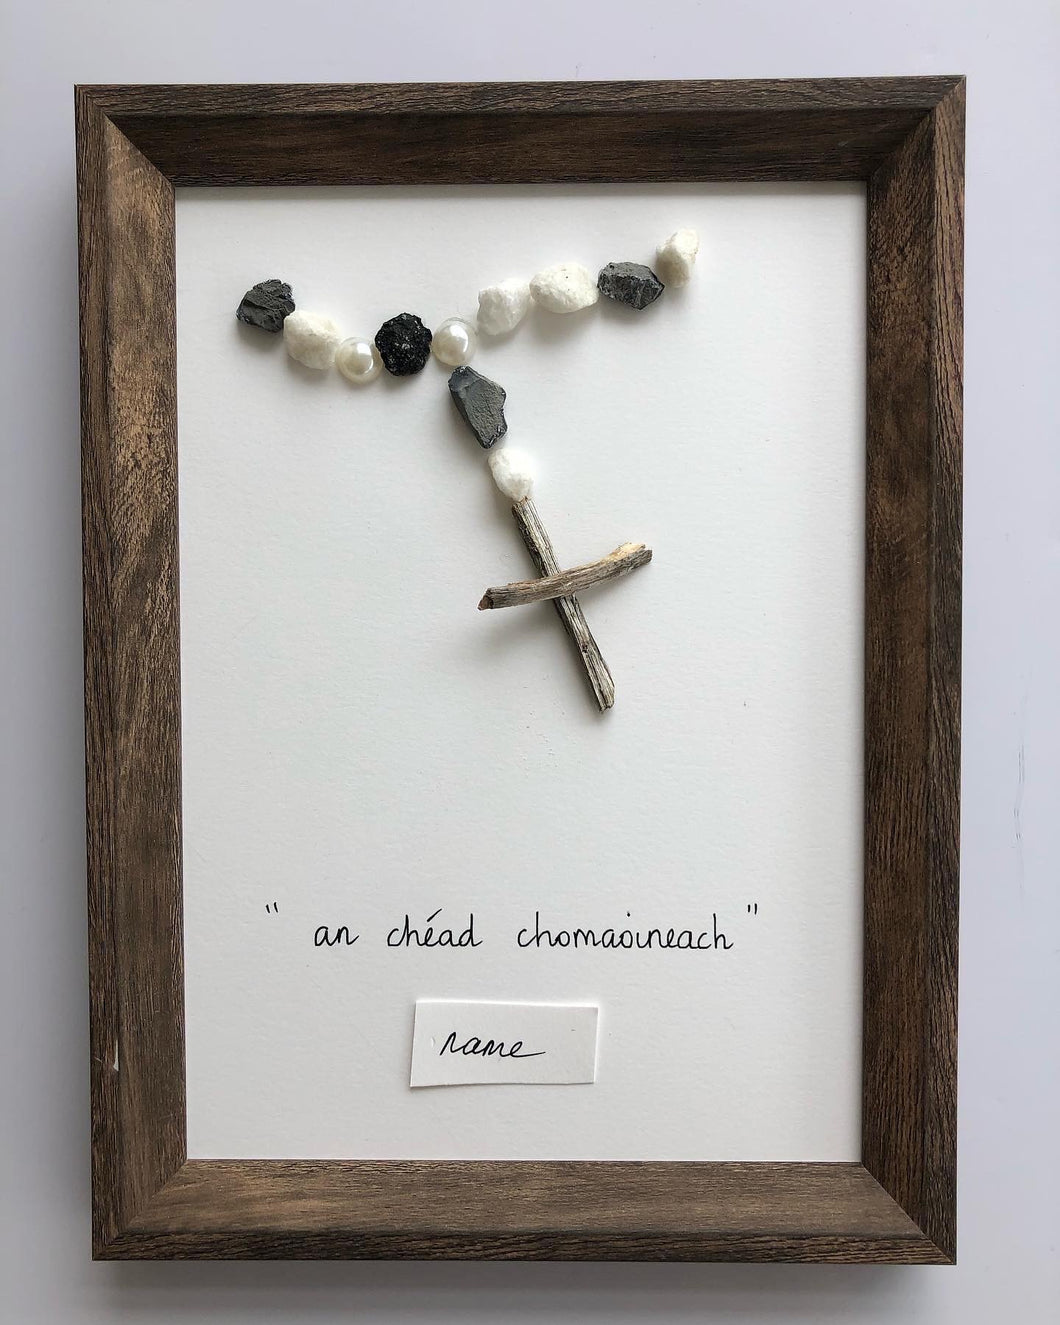 An chéad chomaoineach (first communion)